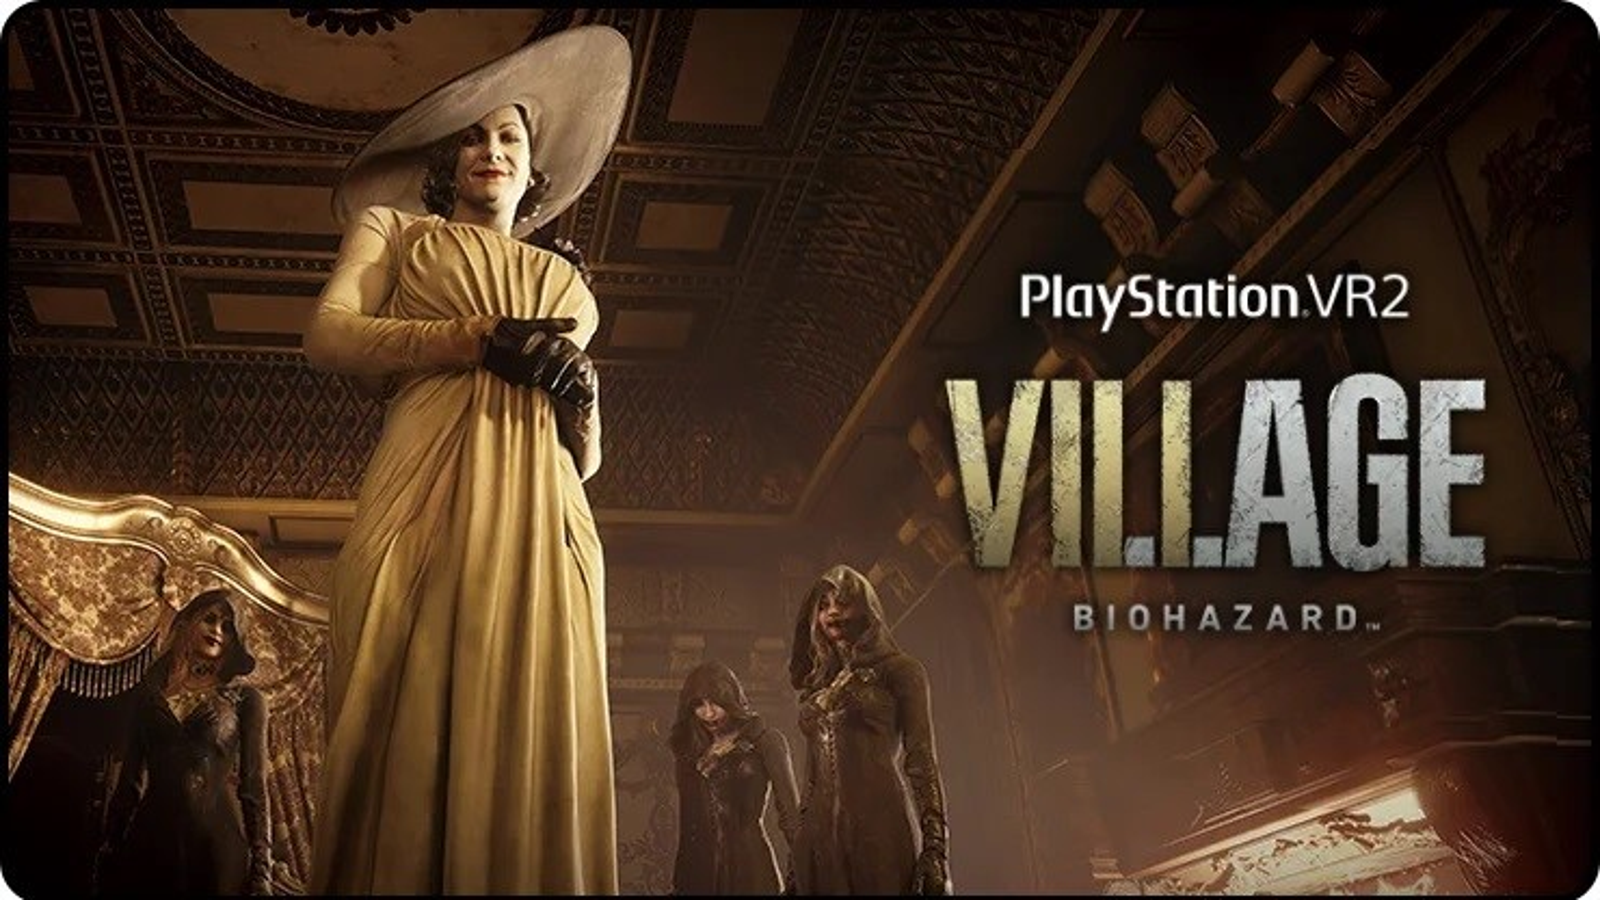 Resident Evil Village Gold Edition - Announcement Trailer 